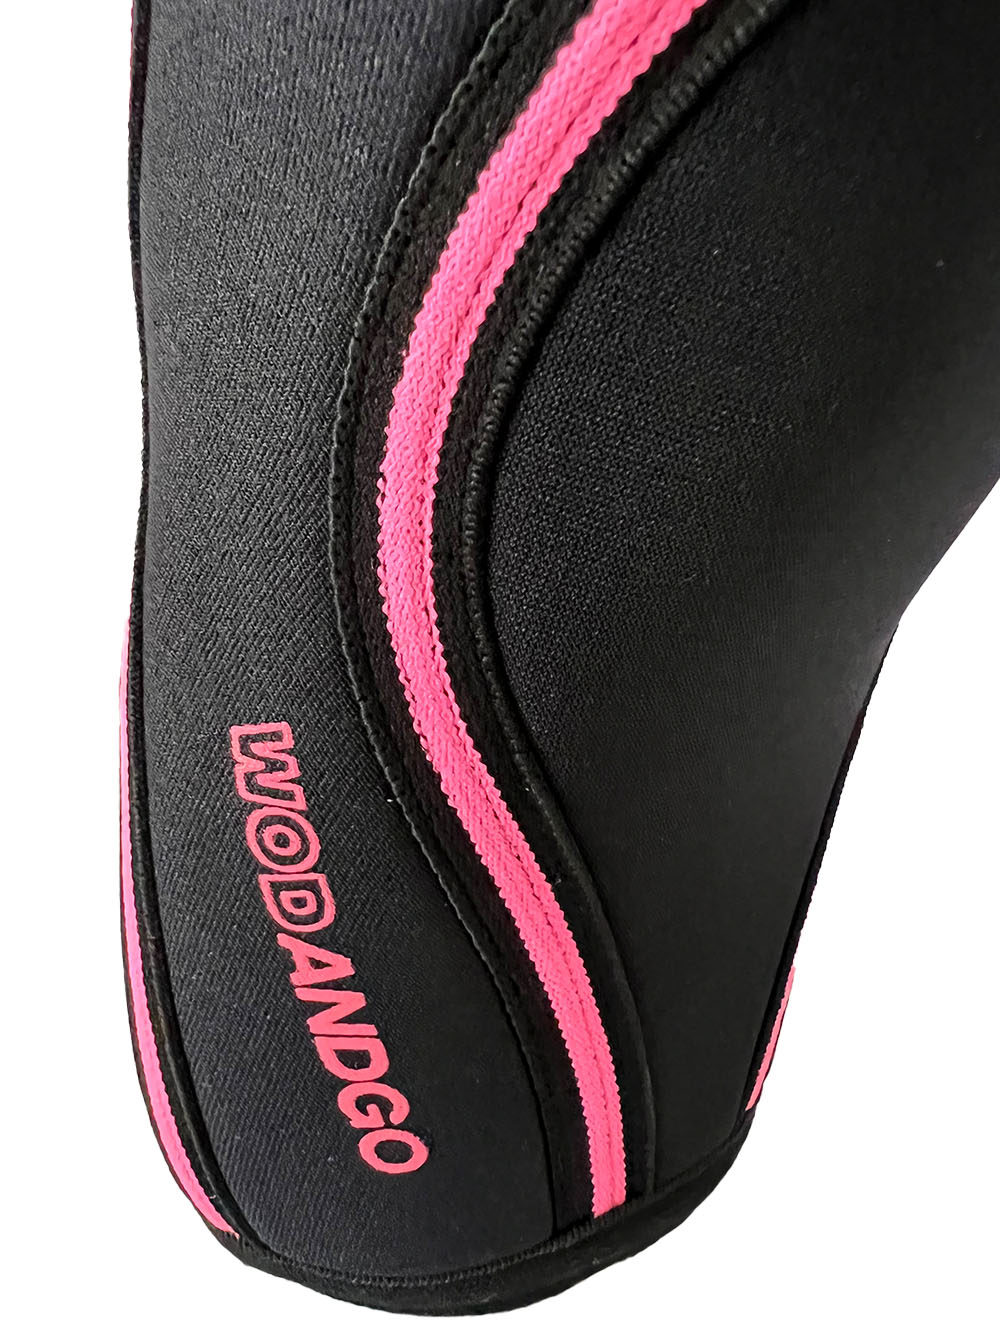 Genouillère Rehband RX Crossfit noir-pink